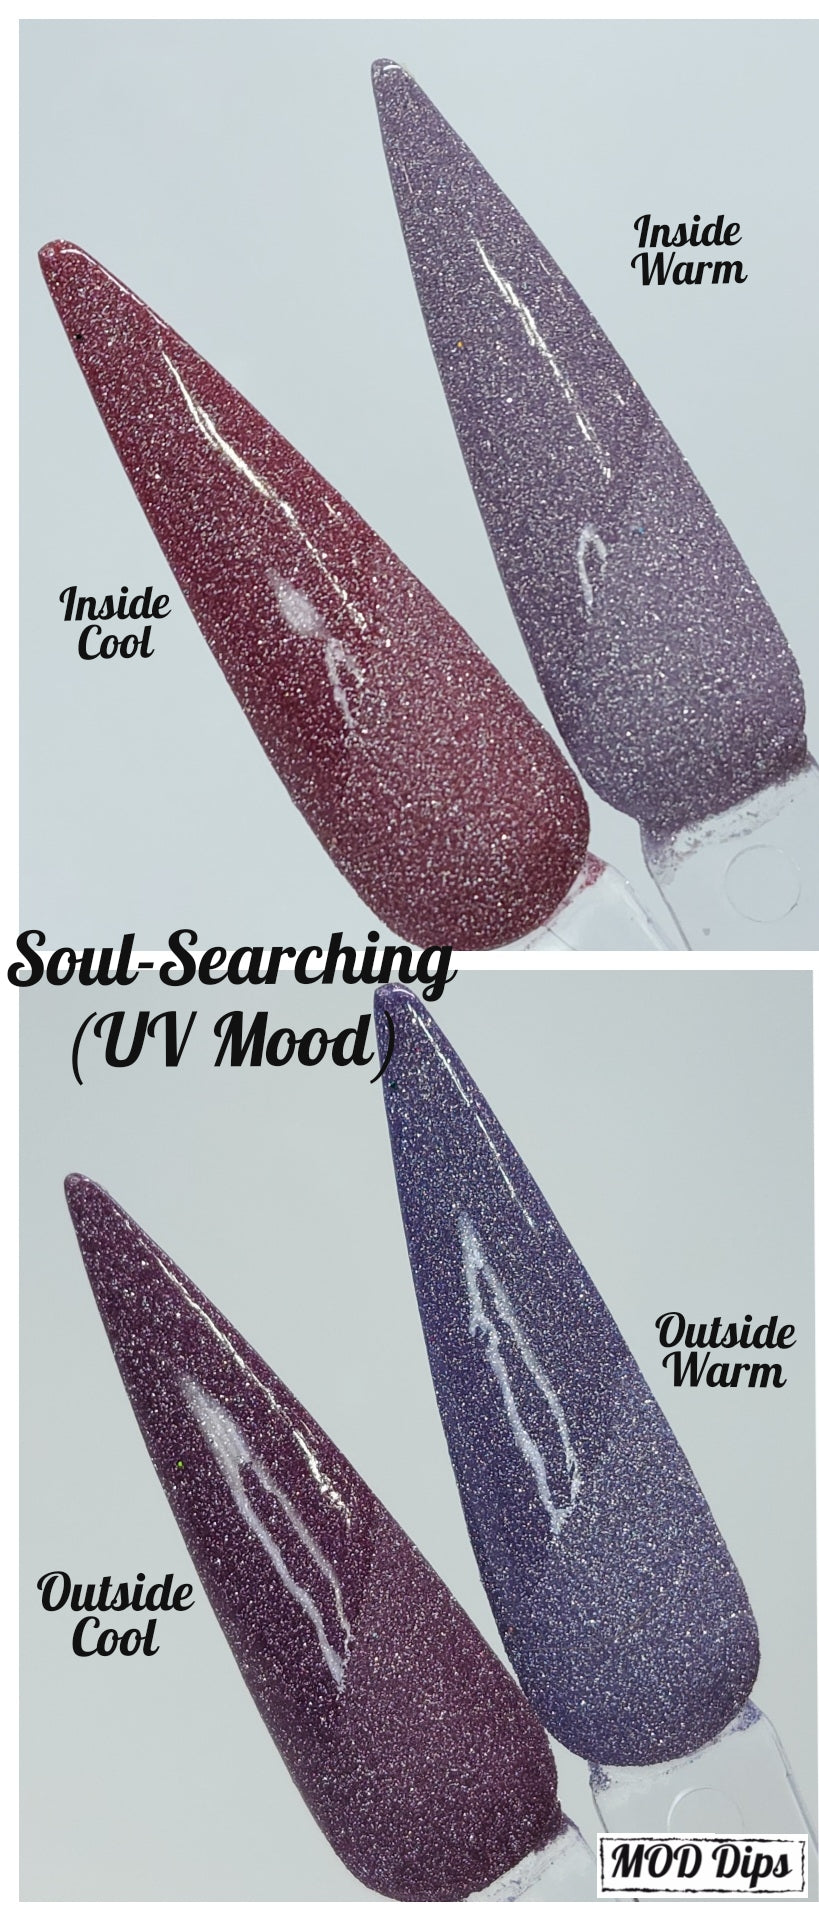 Soul-searching (UV Mood)